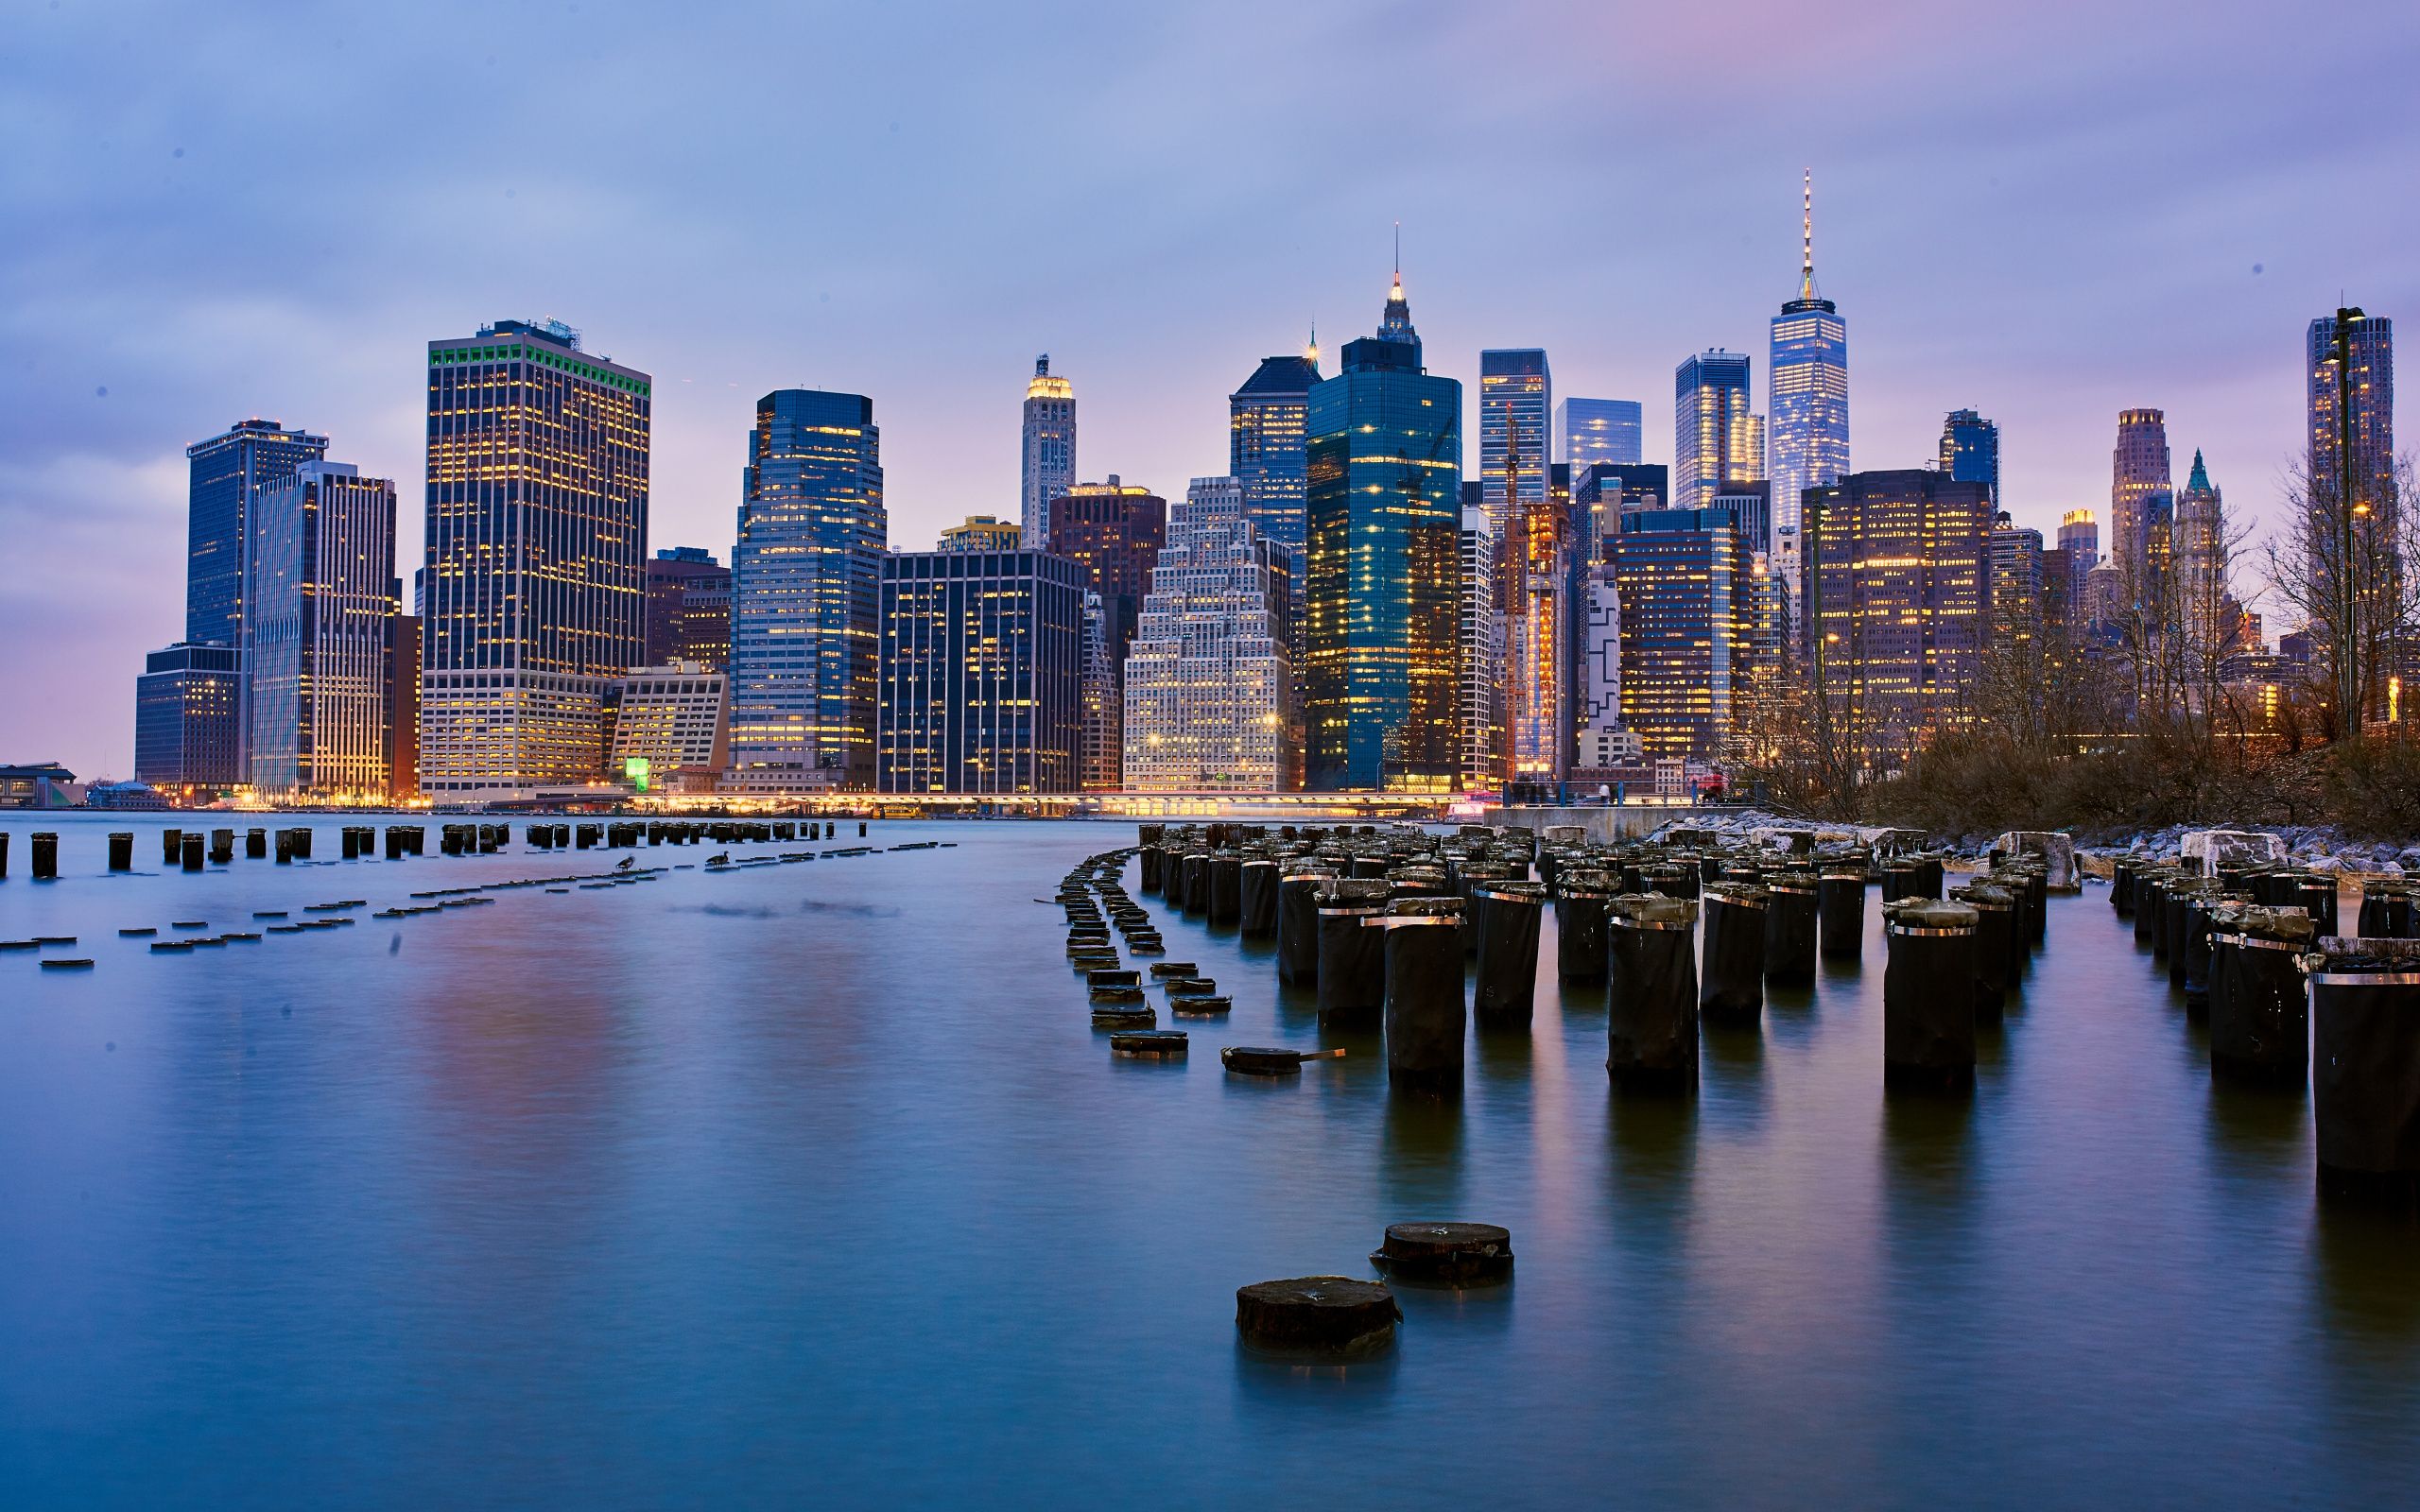 Download New York, buildings, cityscape wallpaper, 2560x Dual Wide, Widescreen 16: Widescreen